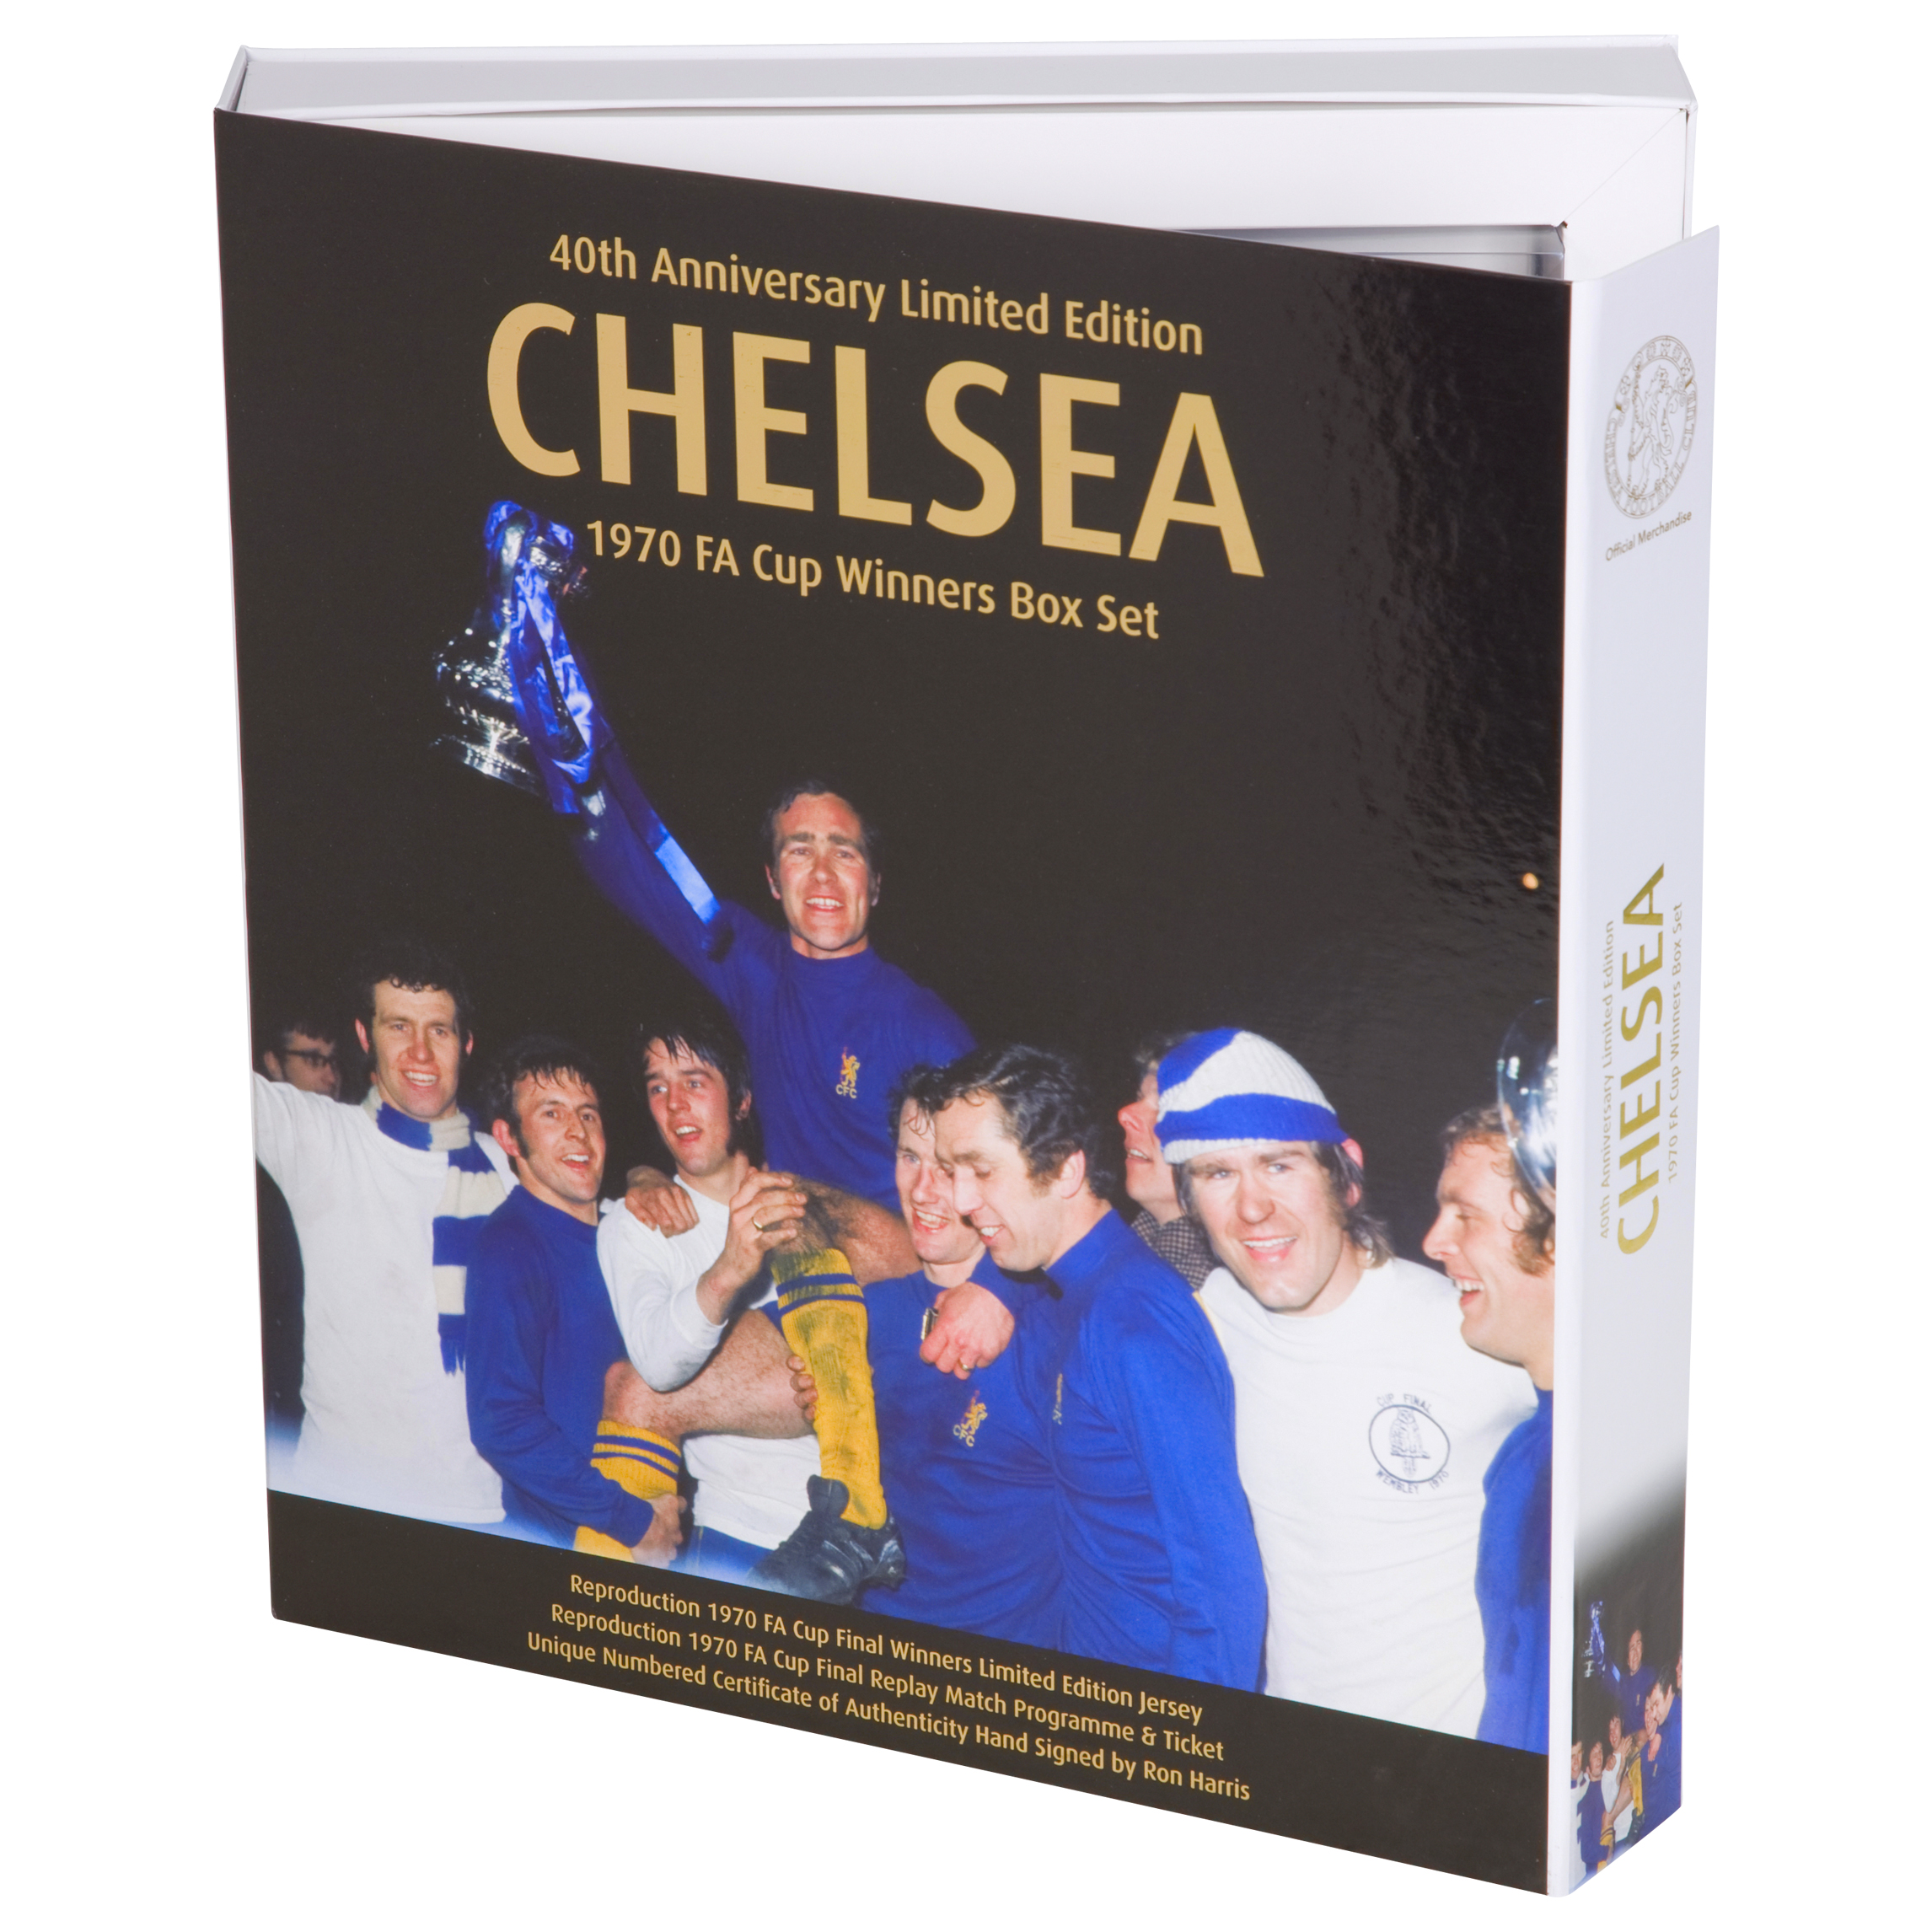 Chelsea 40th Anniversary FA Cup Win Limited Edition Box Set